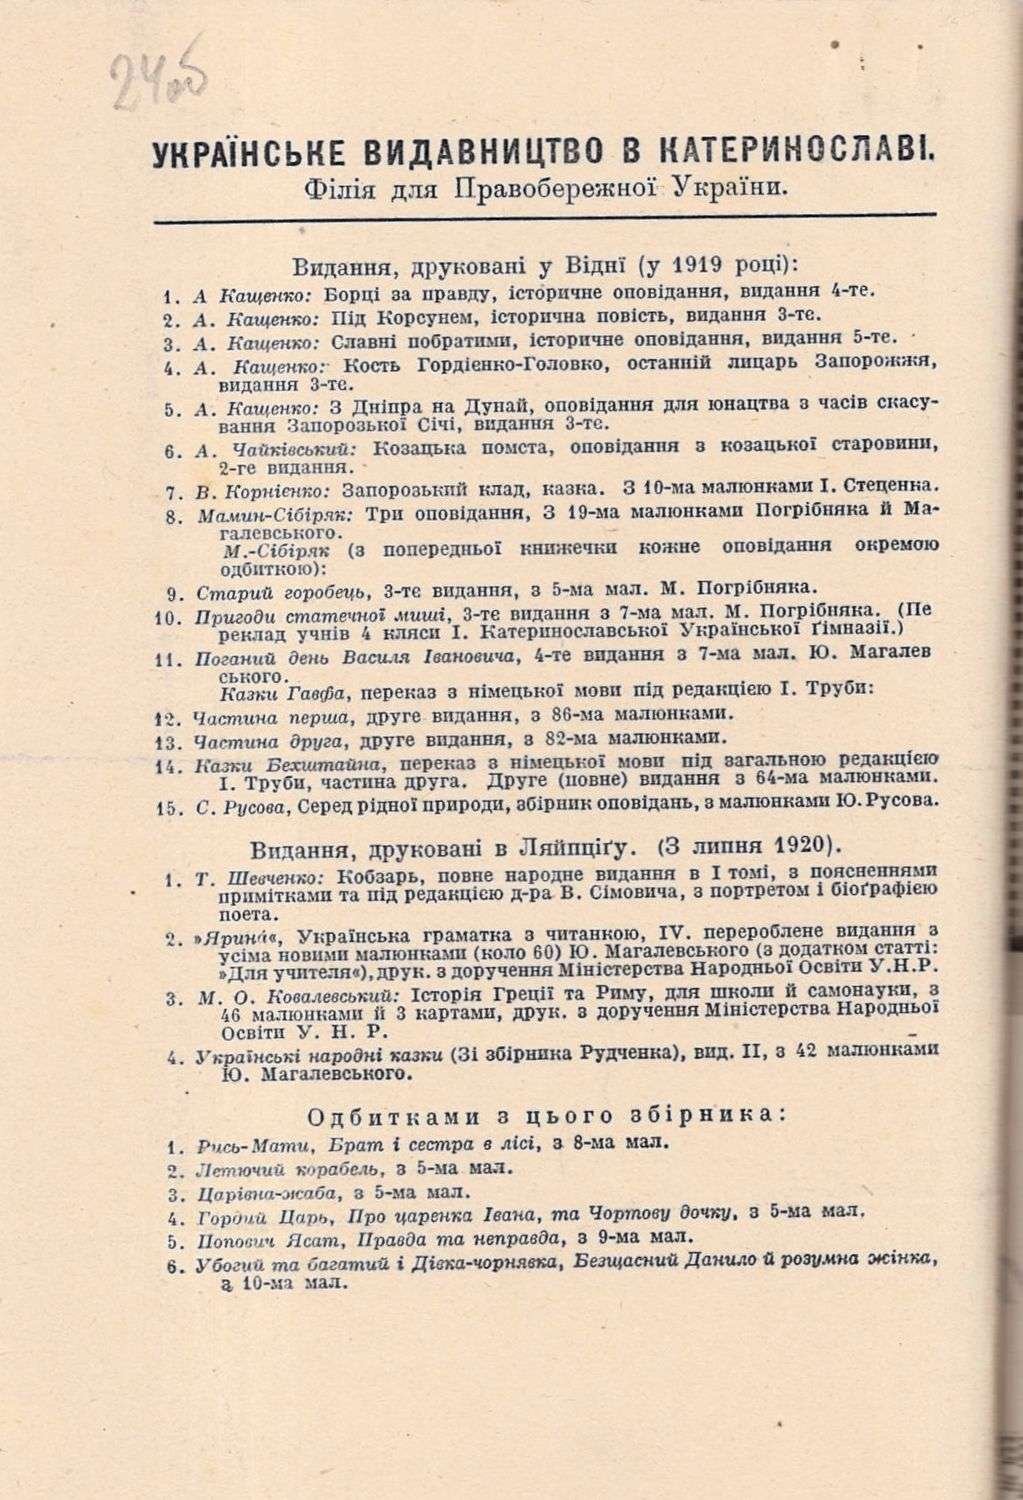 Проспект Українського видавництва в Катеринославі. 1920 р.